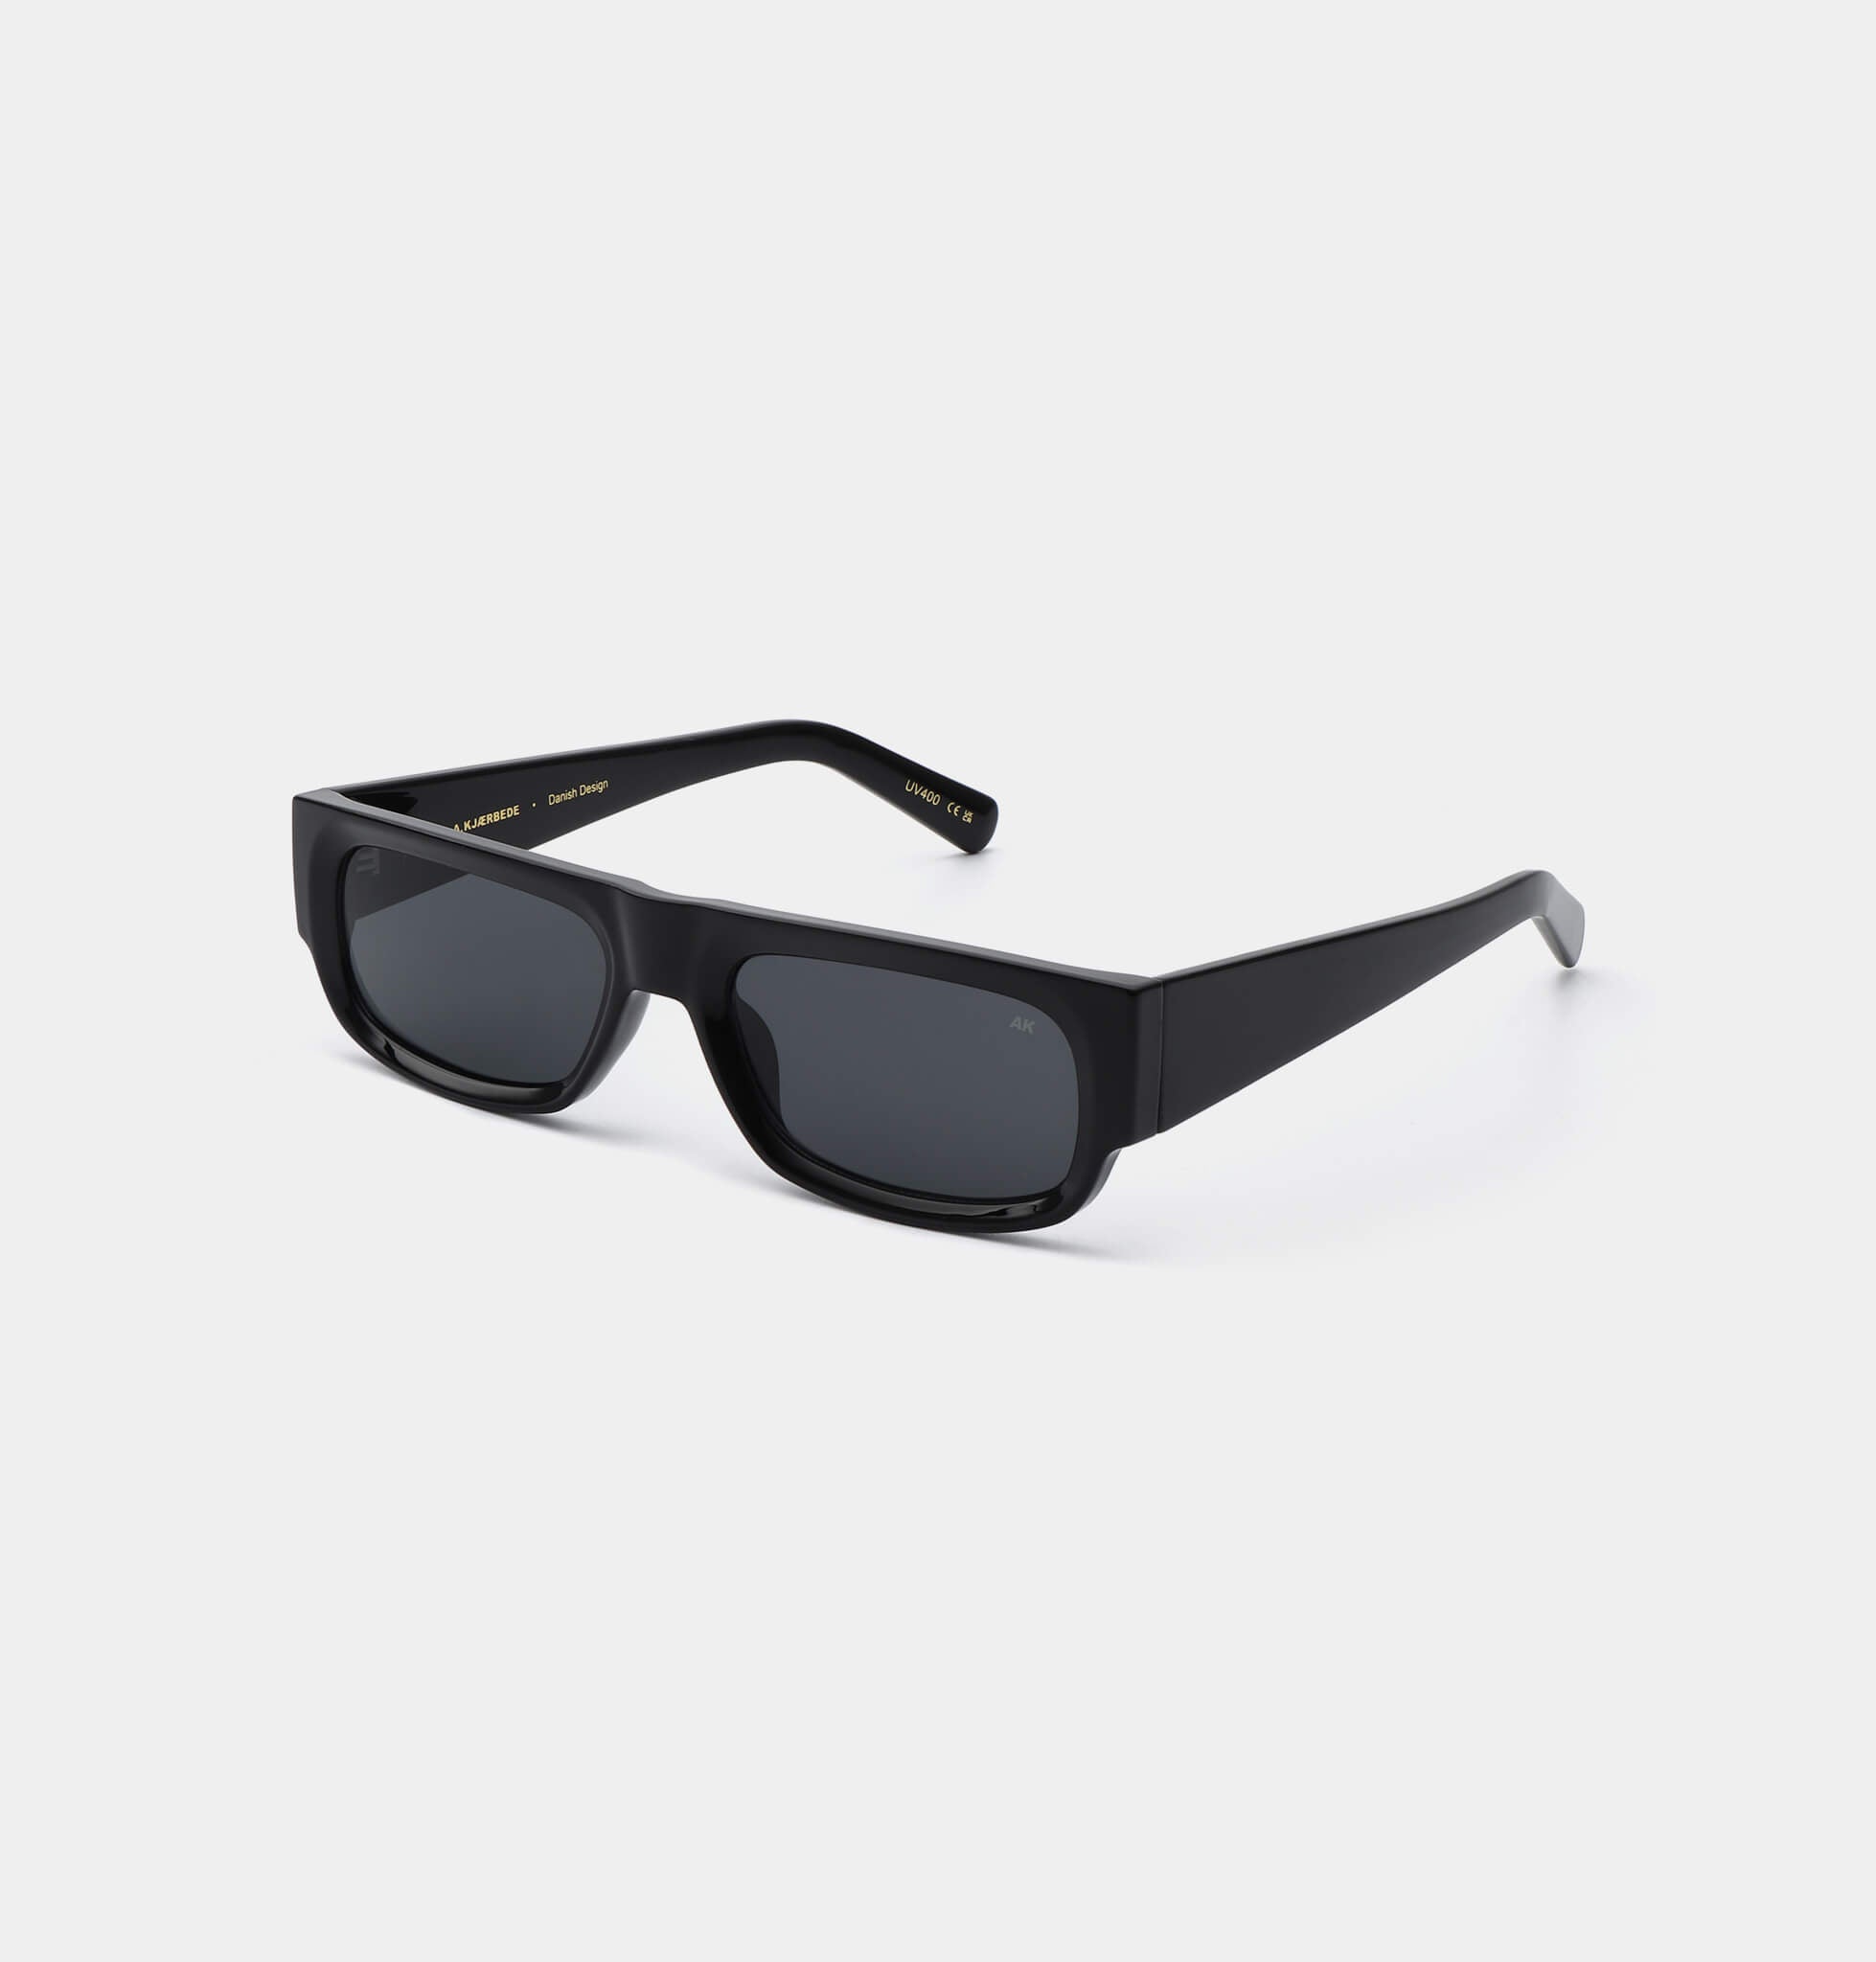 Jean sunglasses in black